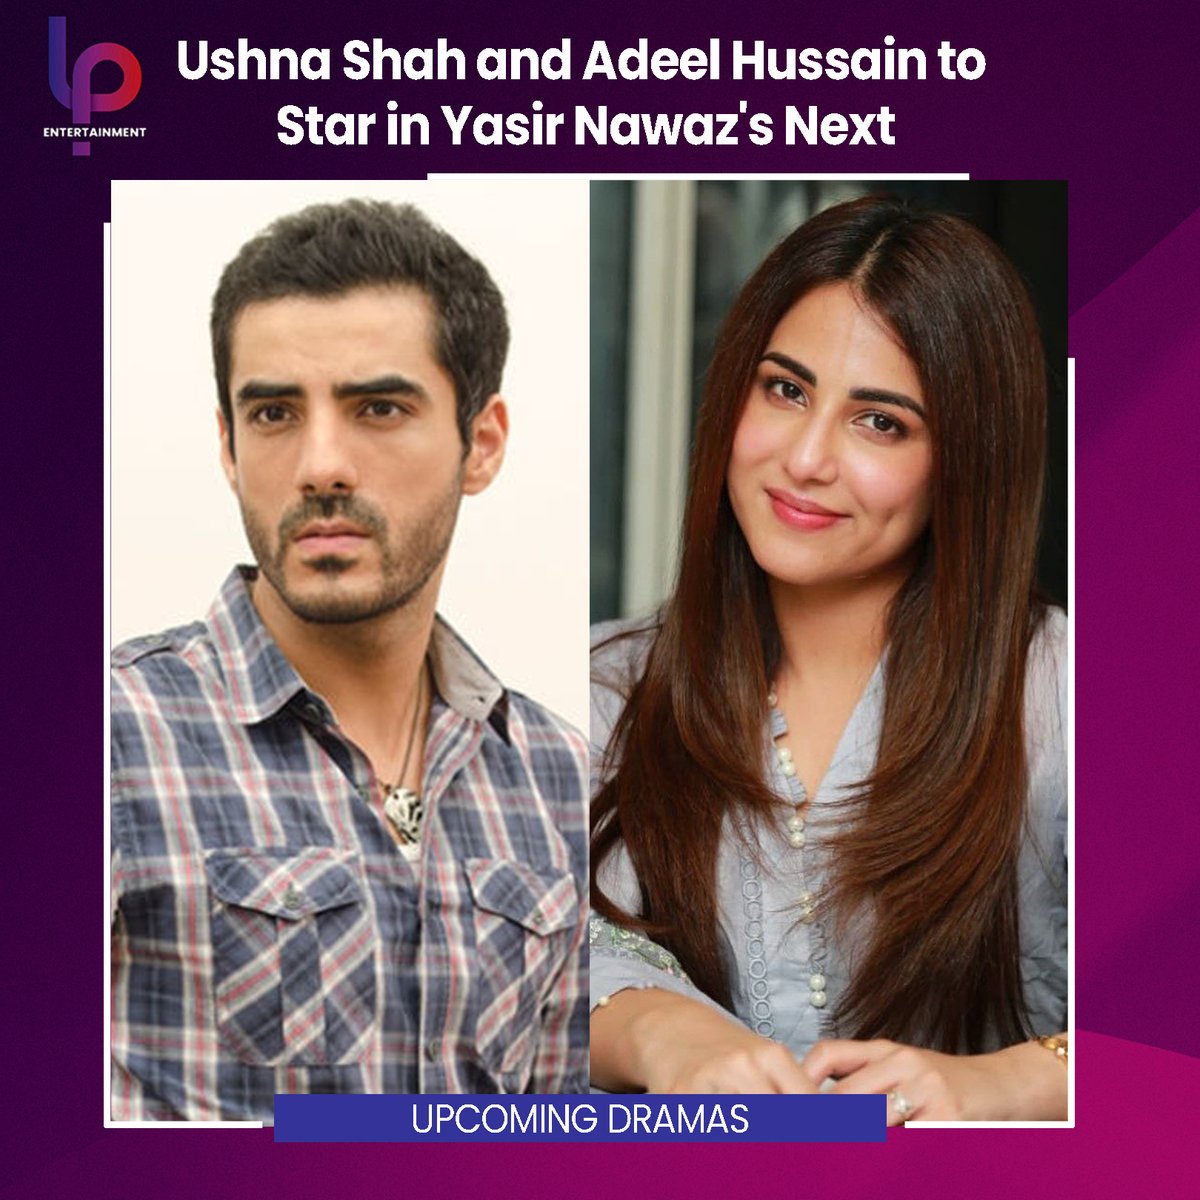 Ushna Shah making her return to TV with Yasir Nawaz's next directorial drama 'Ghair' opposite Adeel Hussain. 

#AdeelHussain #UshnaShah #YasirNawaz #LPEntertainment #UpcomingDramas